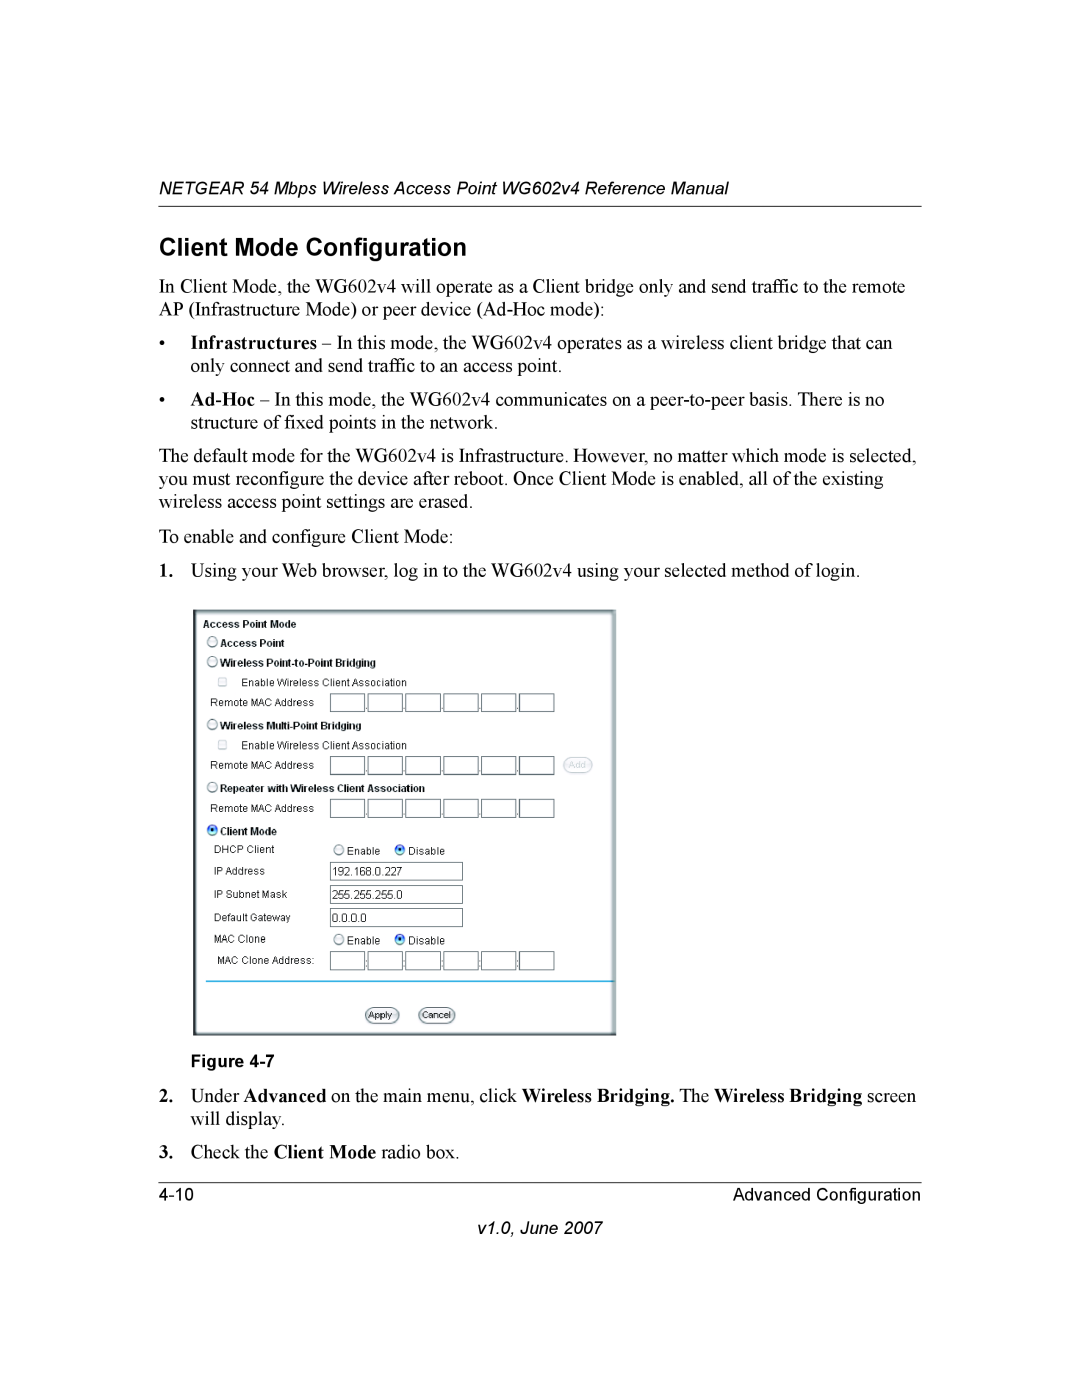 NETGEAR WG602V4 manual Client Mode Configuration 